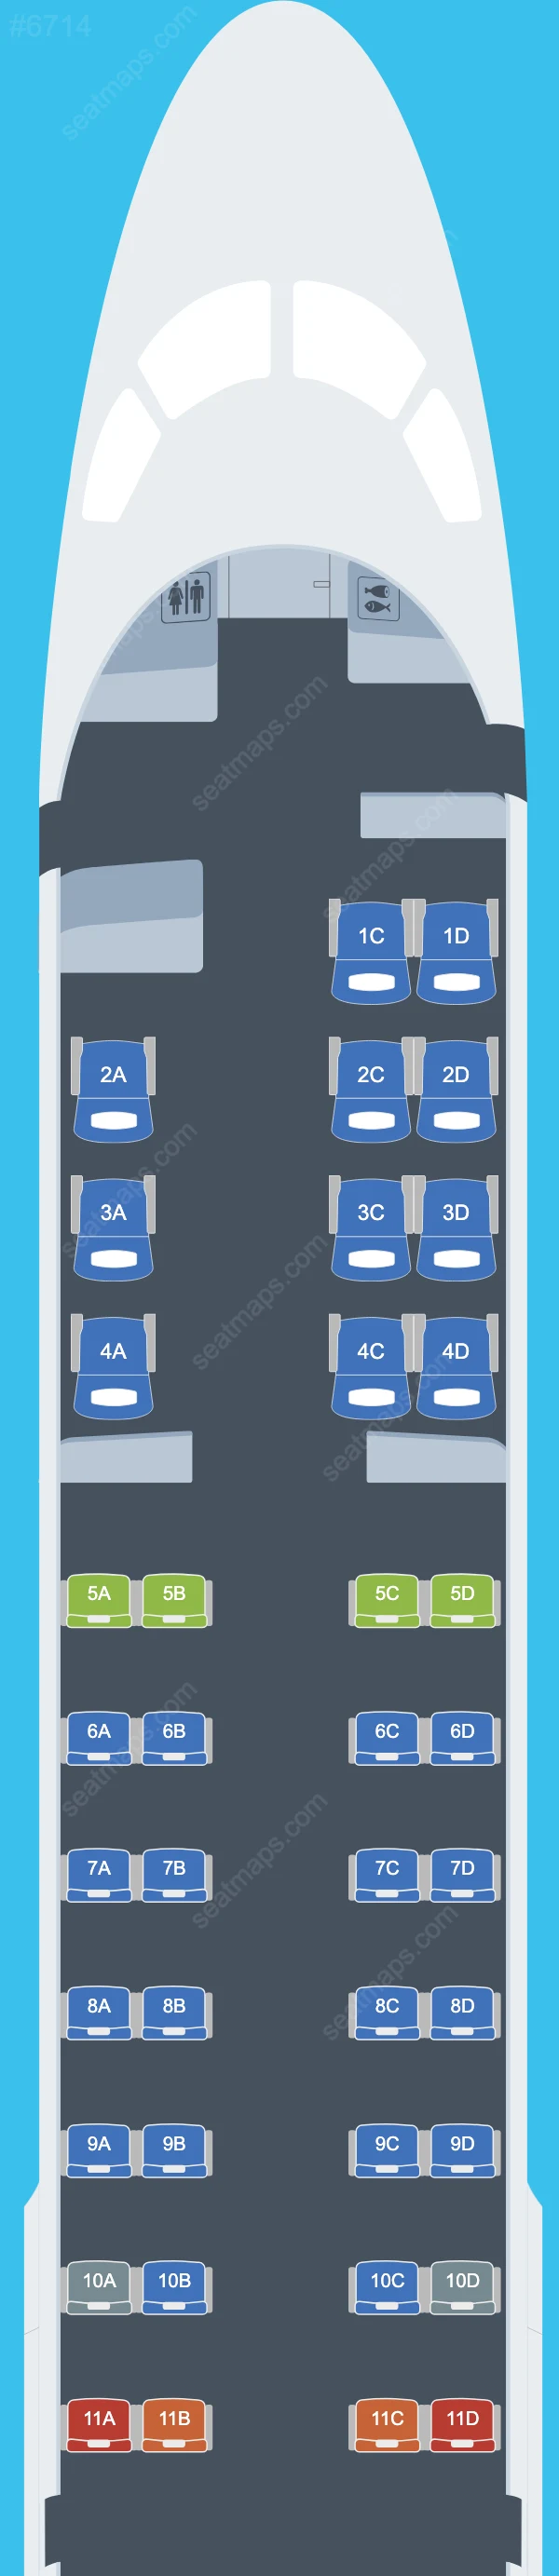 AeroMexico Connect (Aerolitoral) Embraer E190 Seat Maps E190